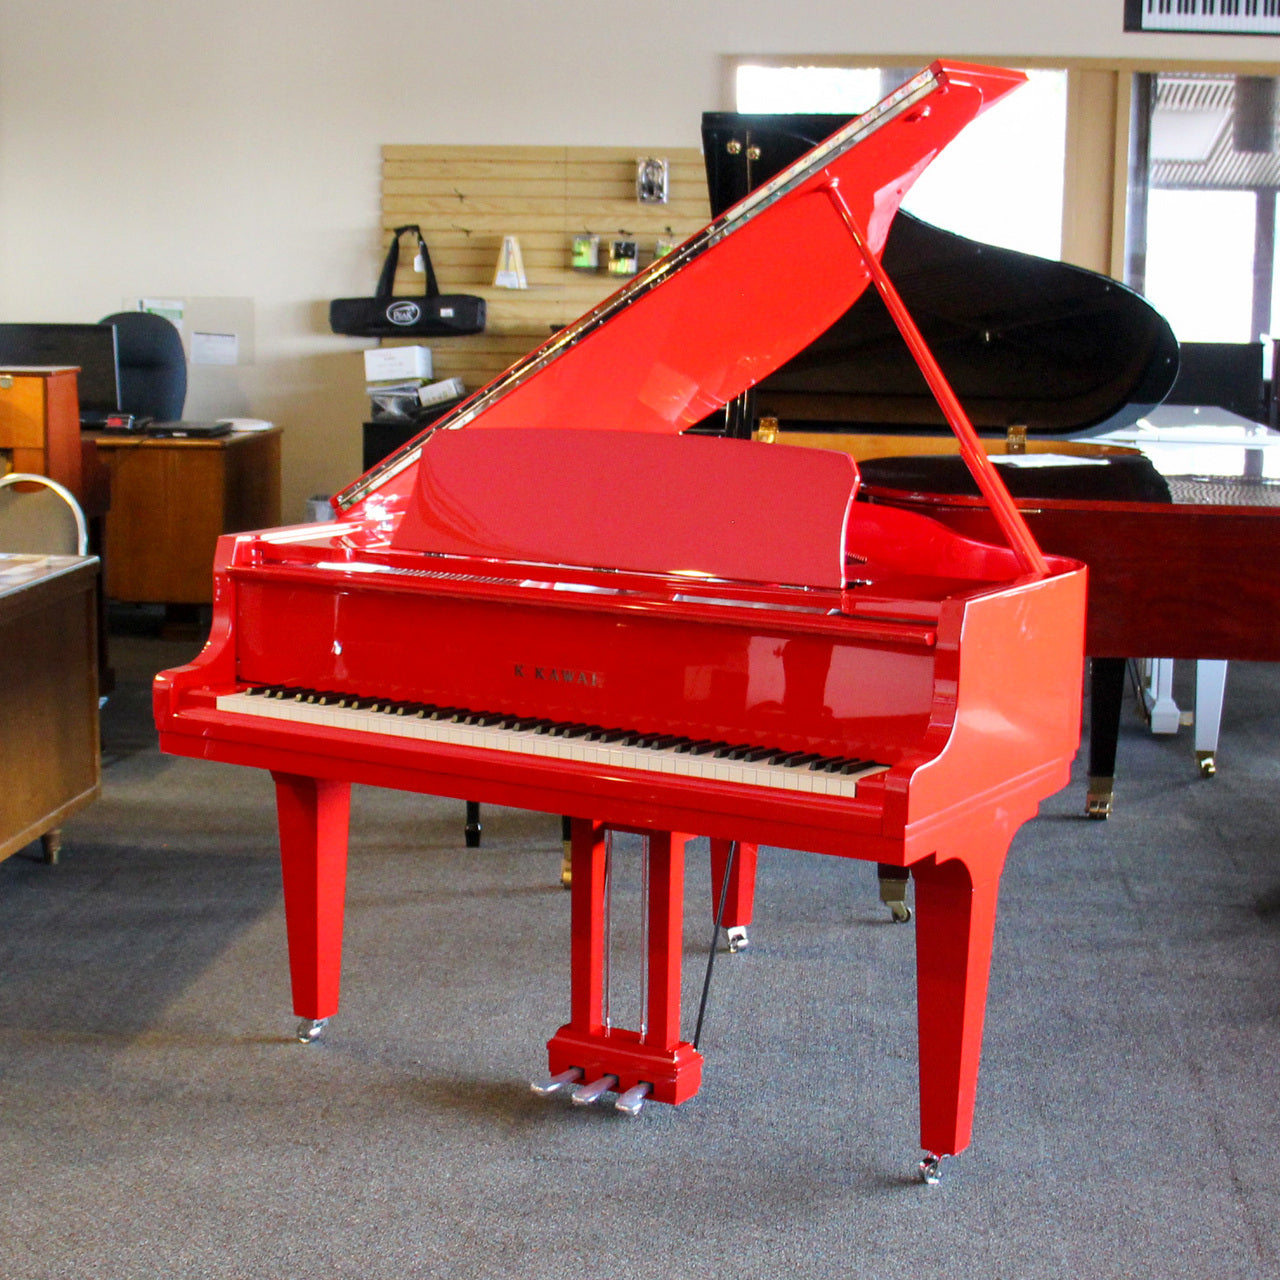 Kawai GL-10 | 5'0" Classic Baby Grand Piano | Ferrari Red Polish | New